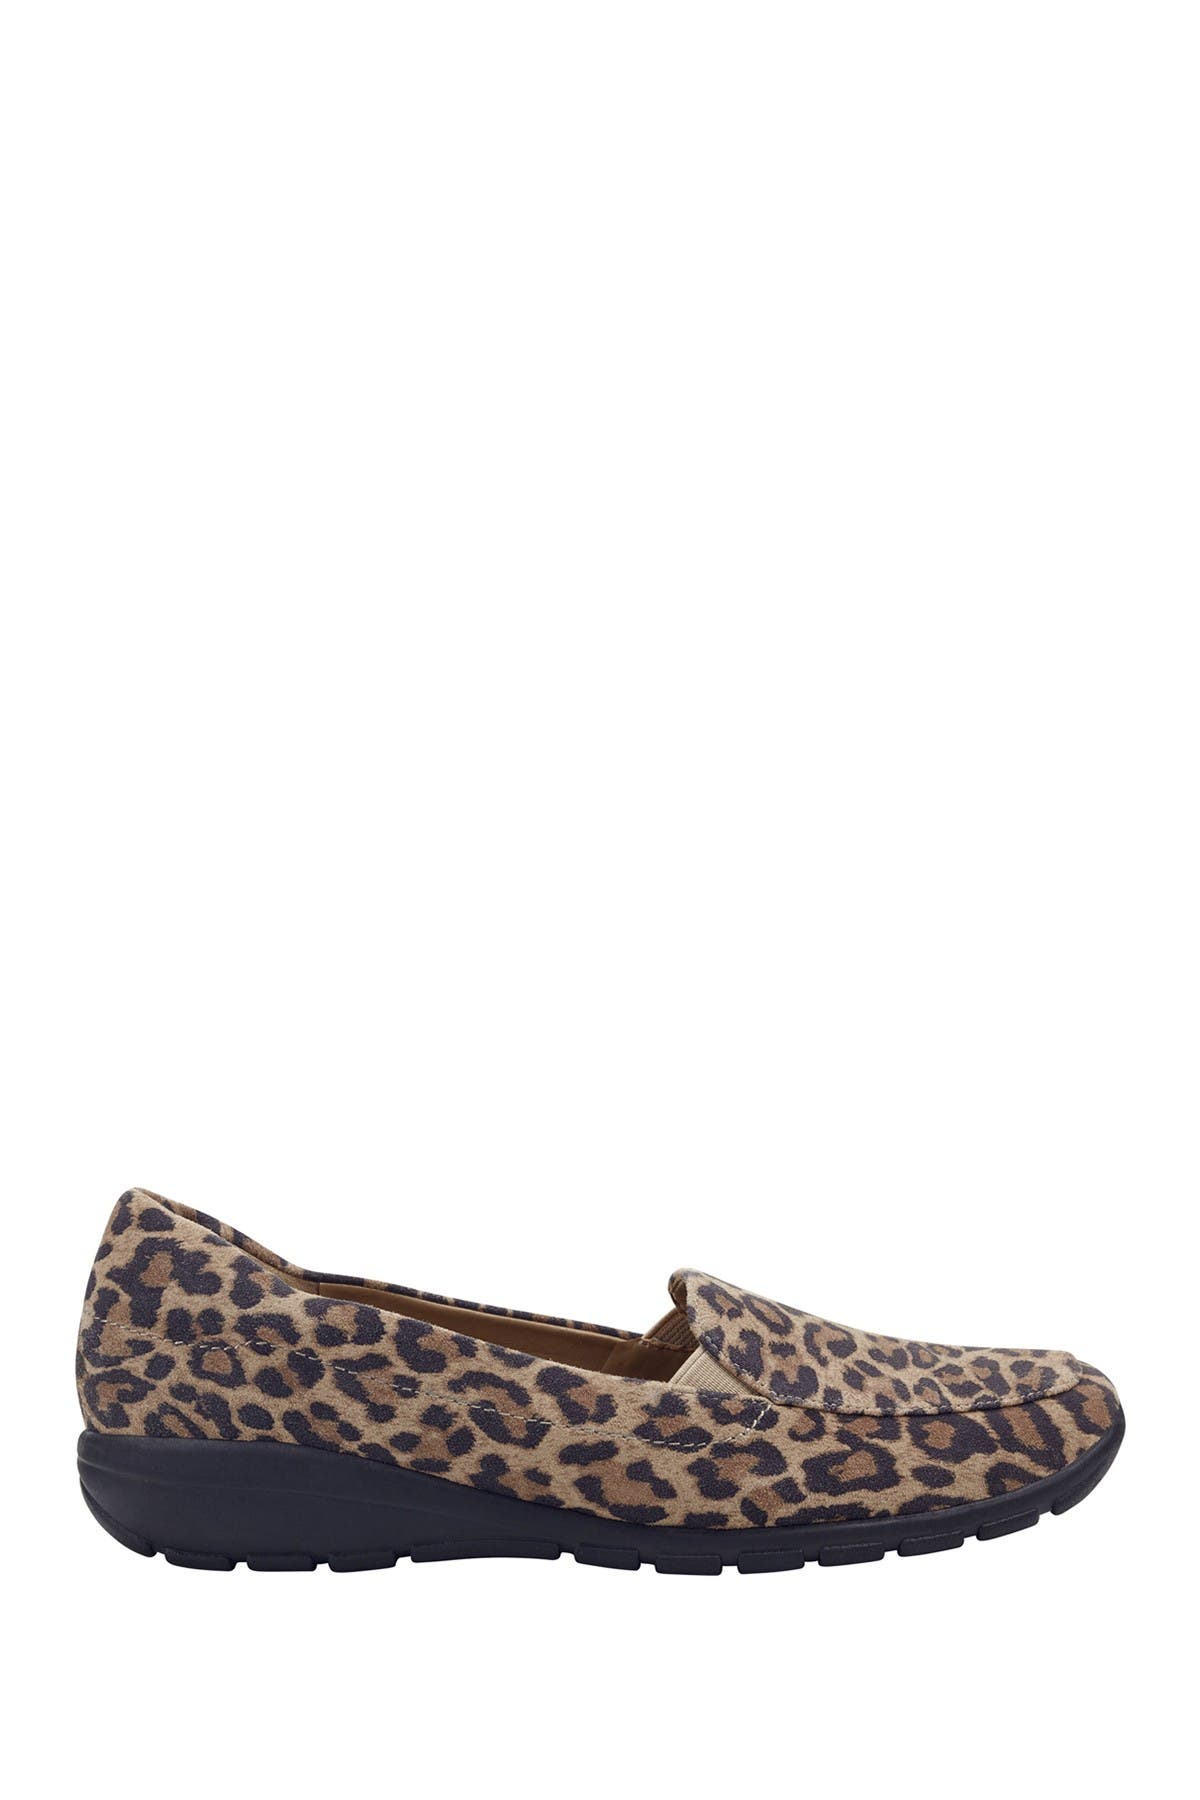 easy spirit leopard print shoes